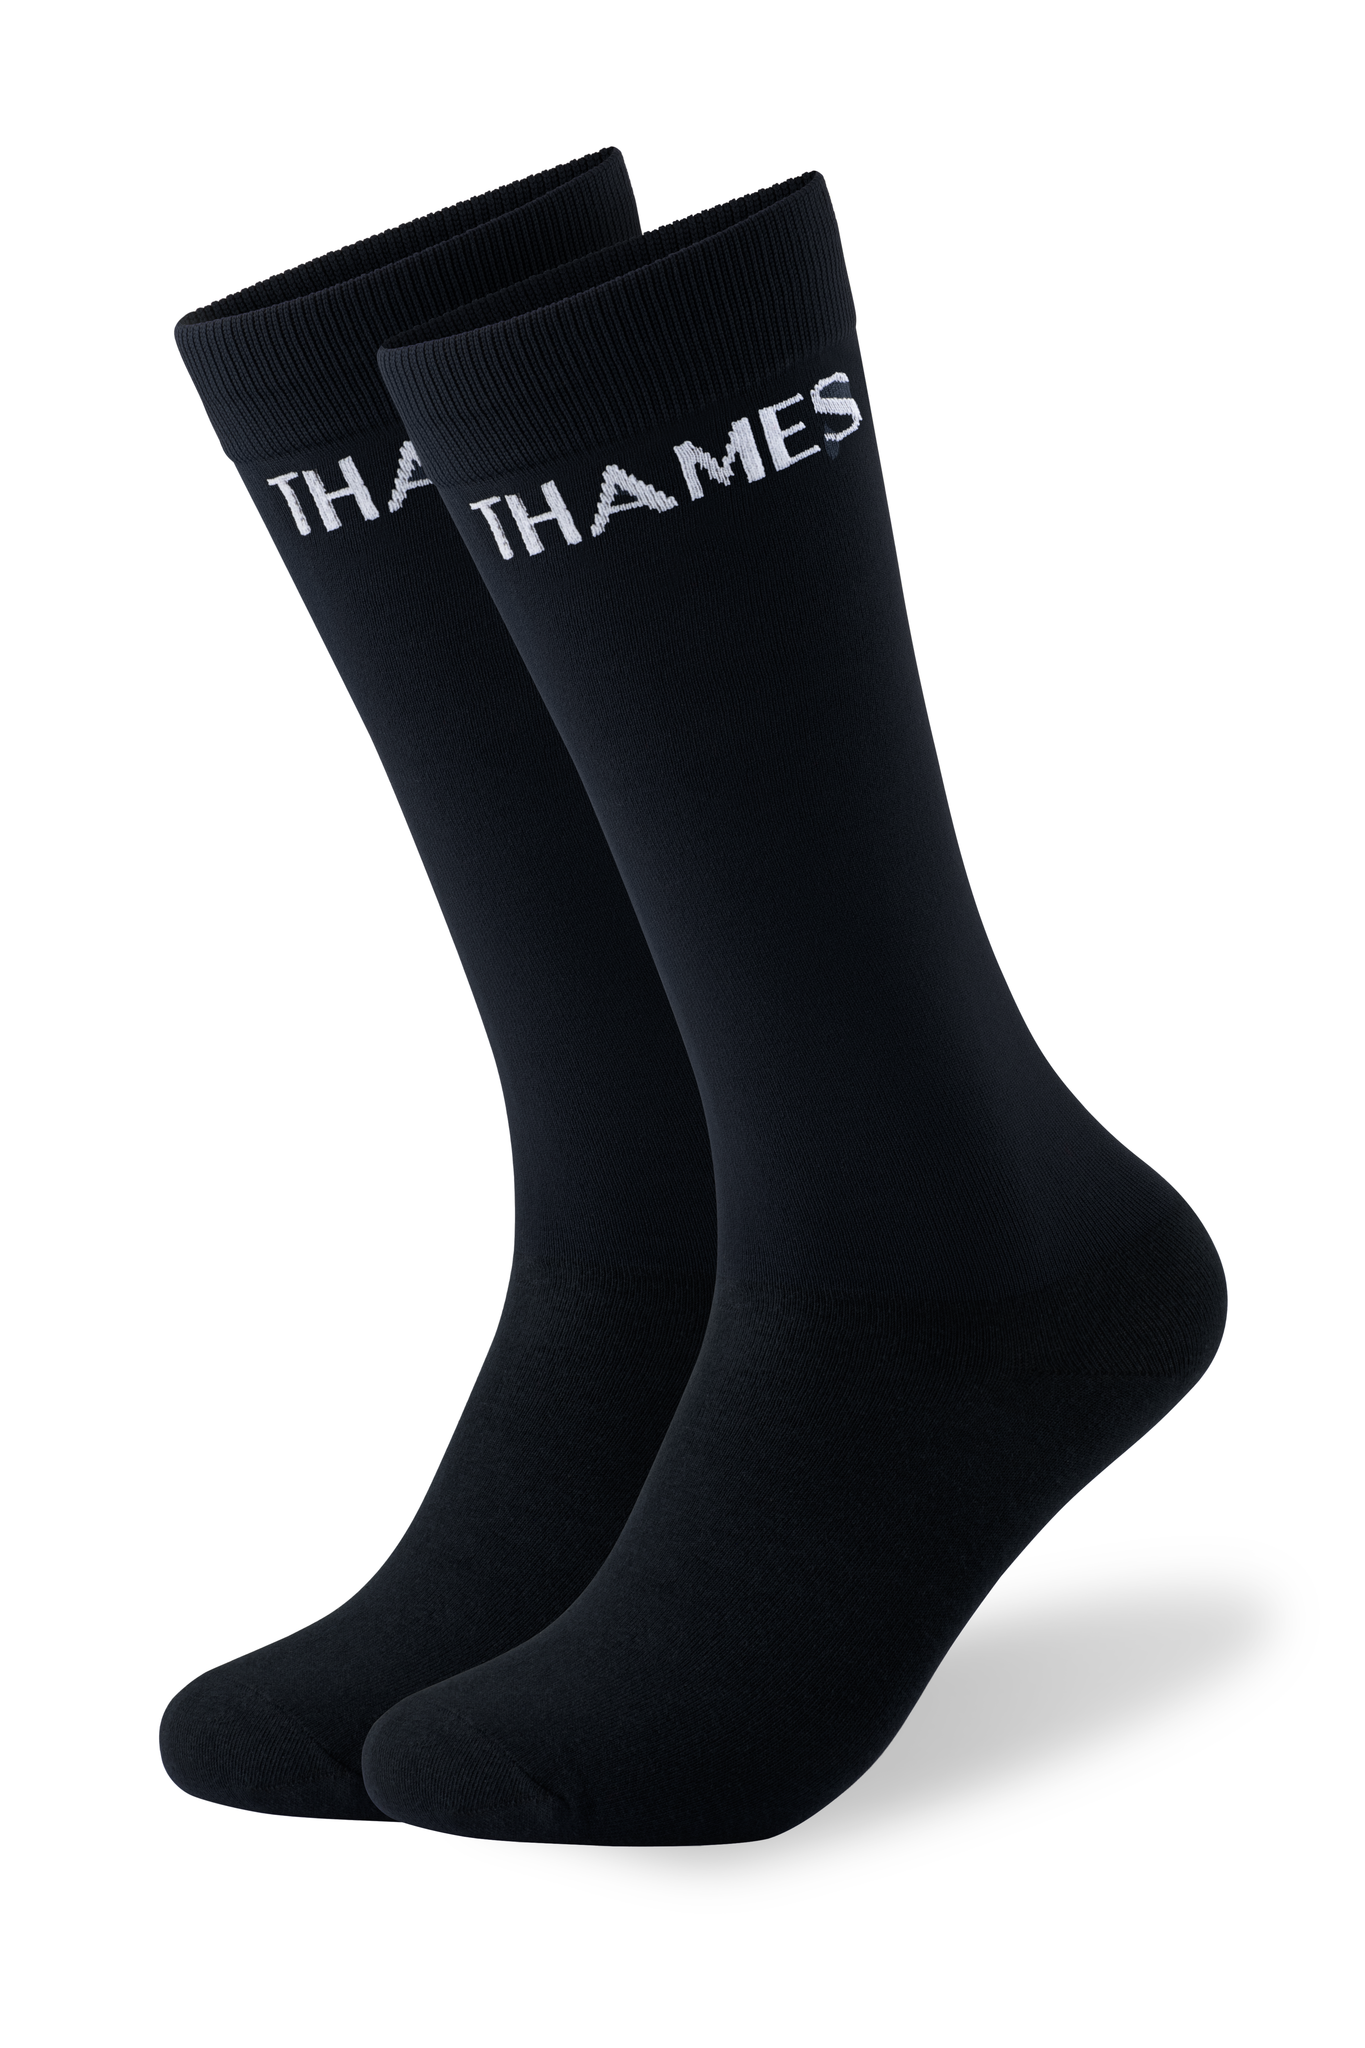 Thames Riding Socks - Black